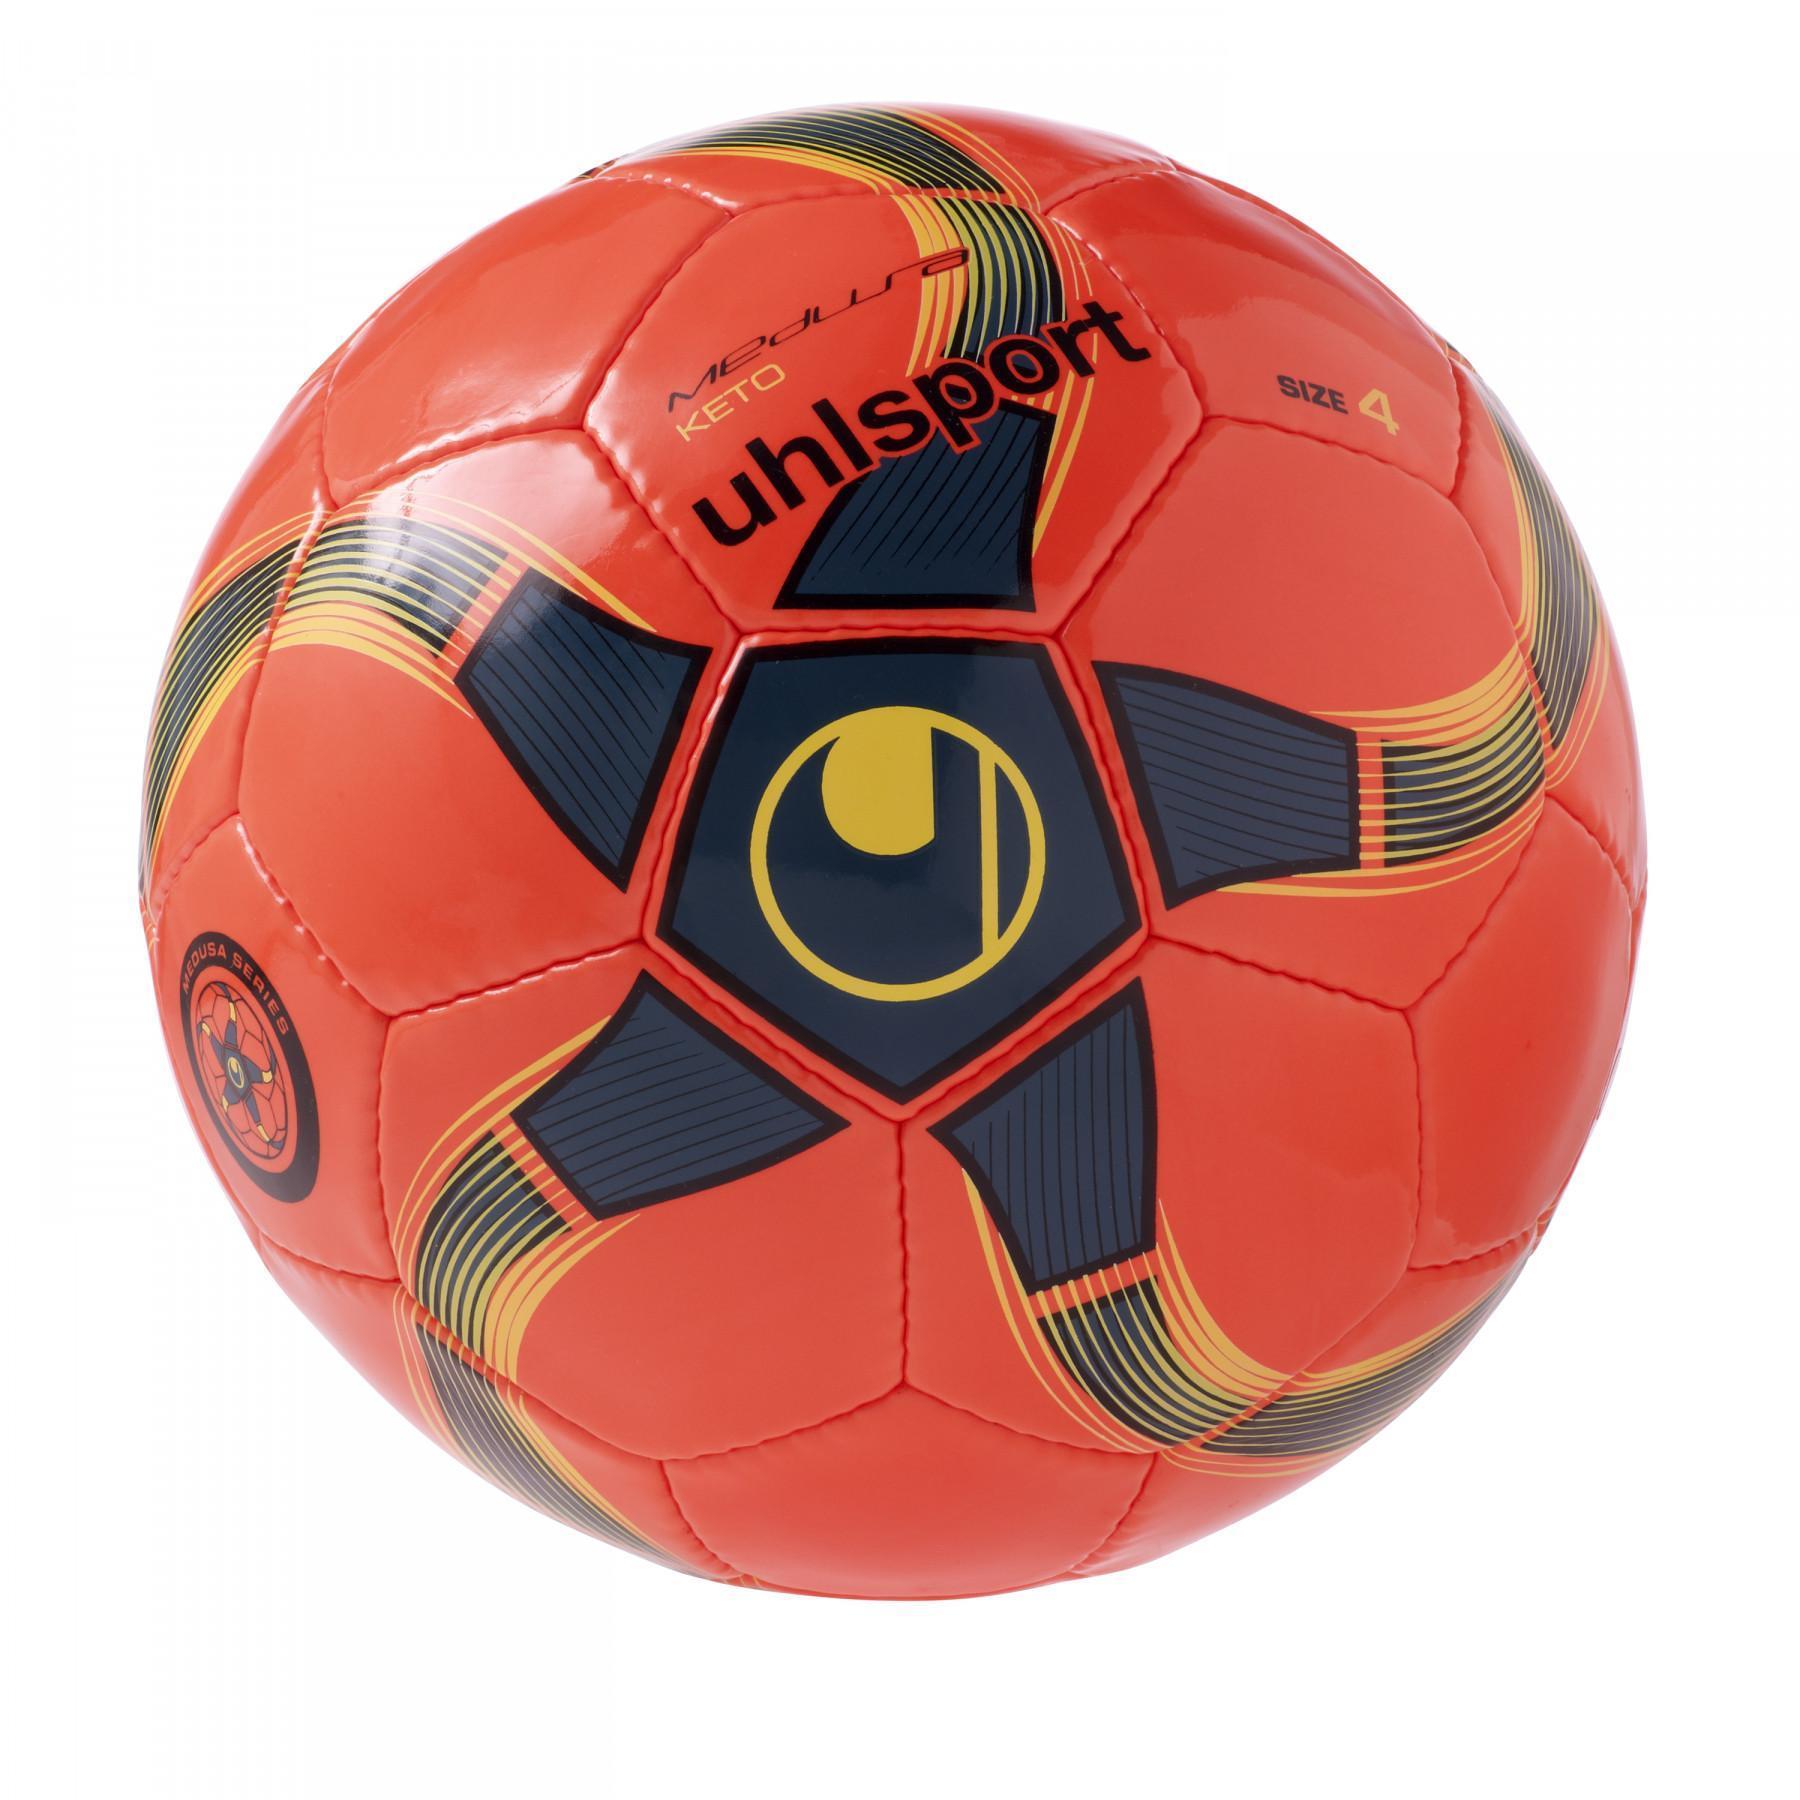 Balón de fútbol sala Uhlsport Medusa Keto Taille 4